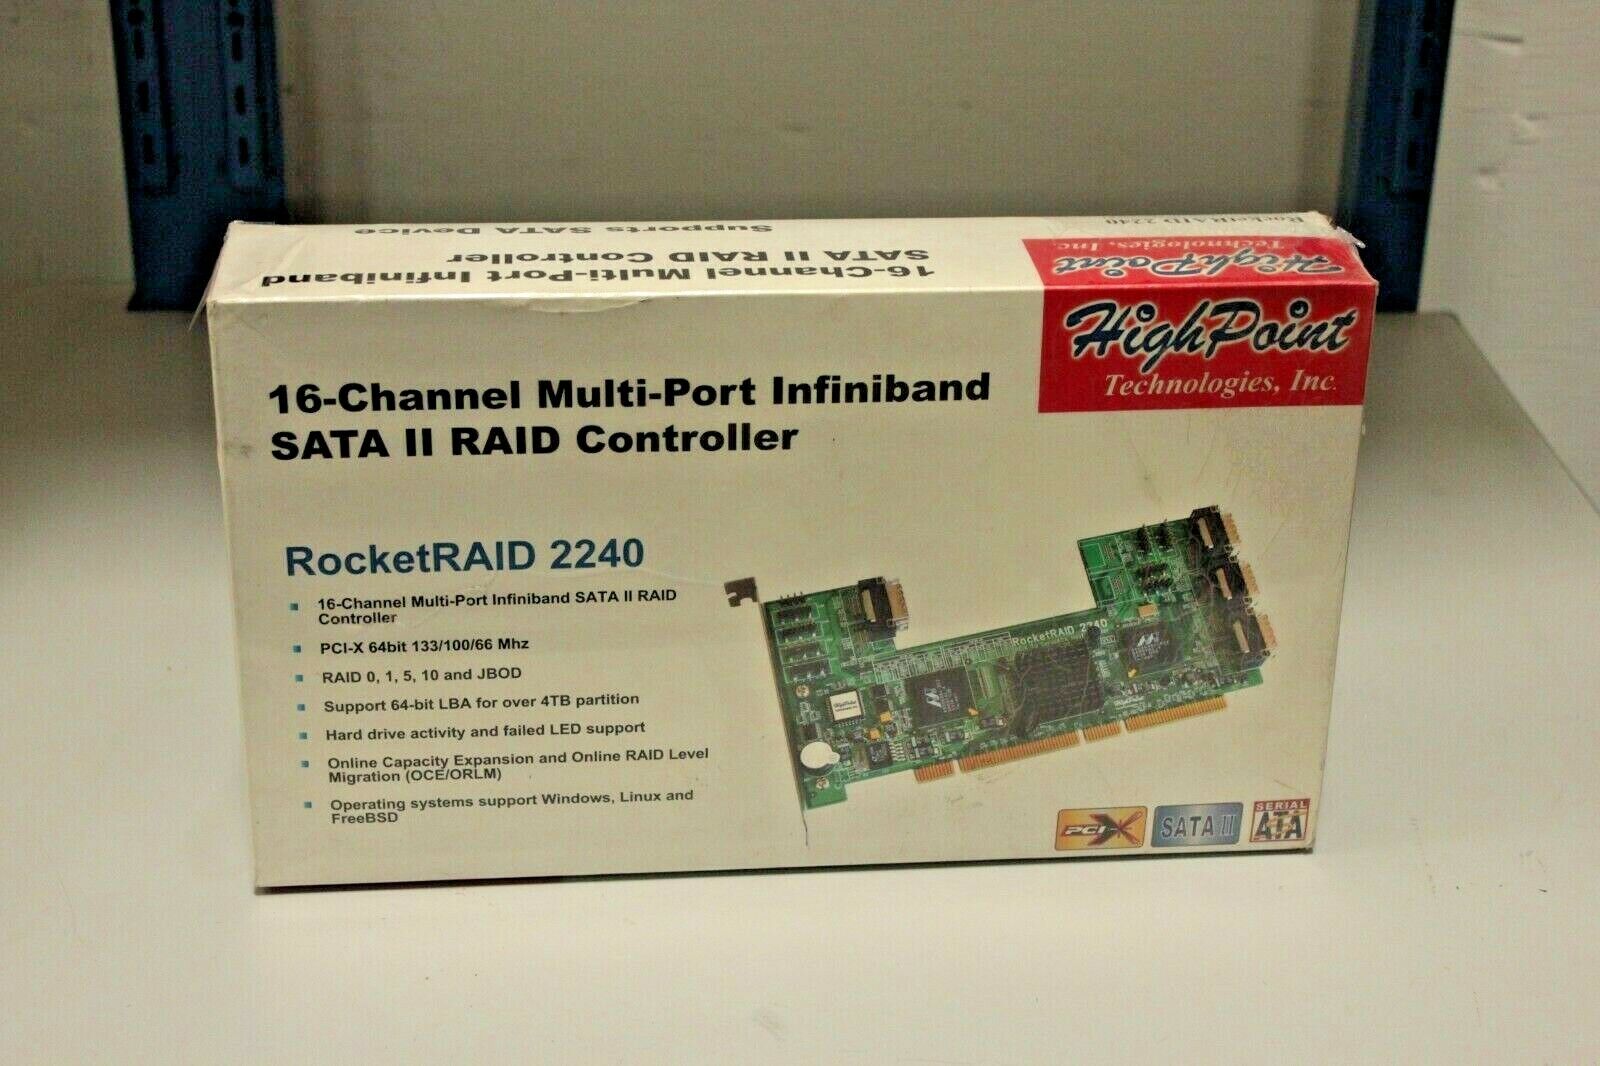 High Point RocketRAID 2240 16-Channel Multi-Port SATA II RAID Controller PCI 64